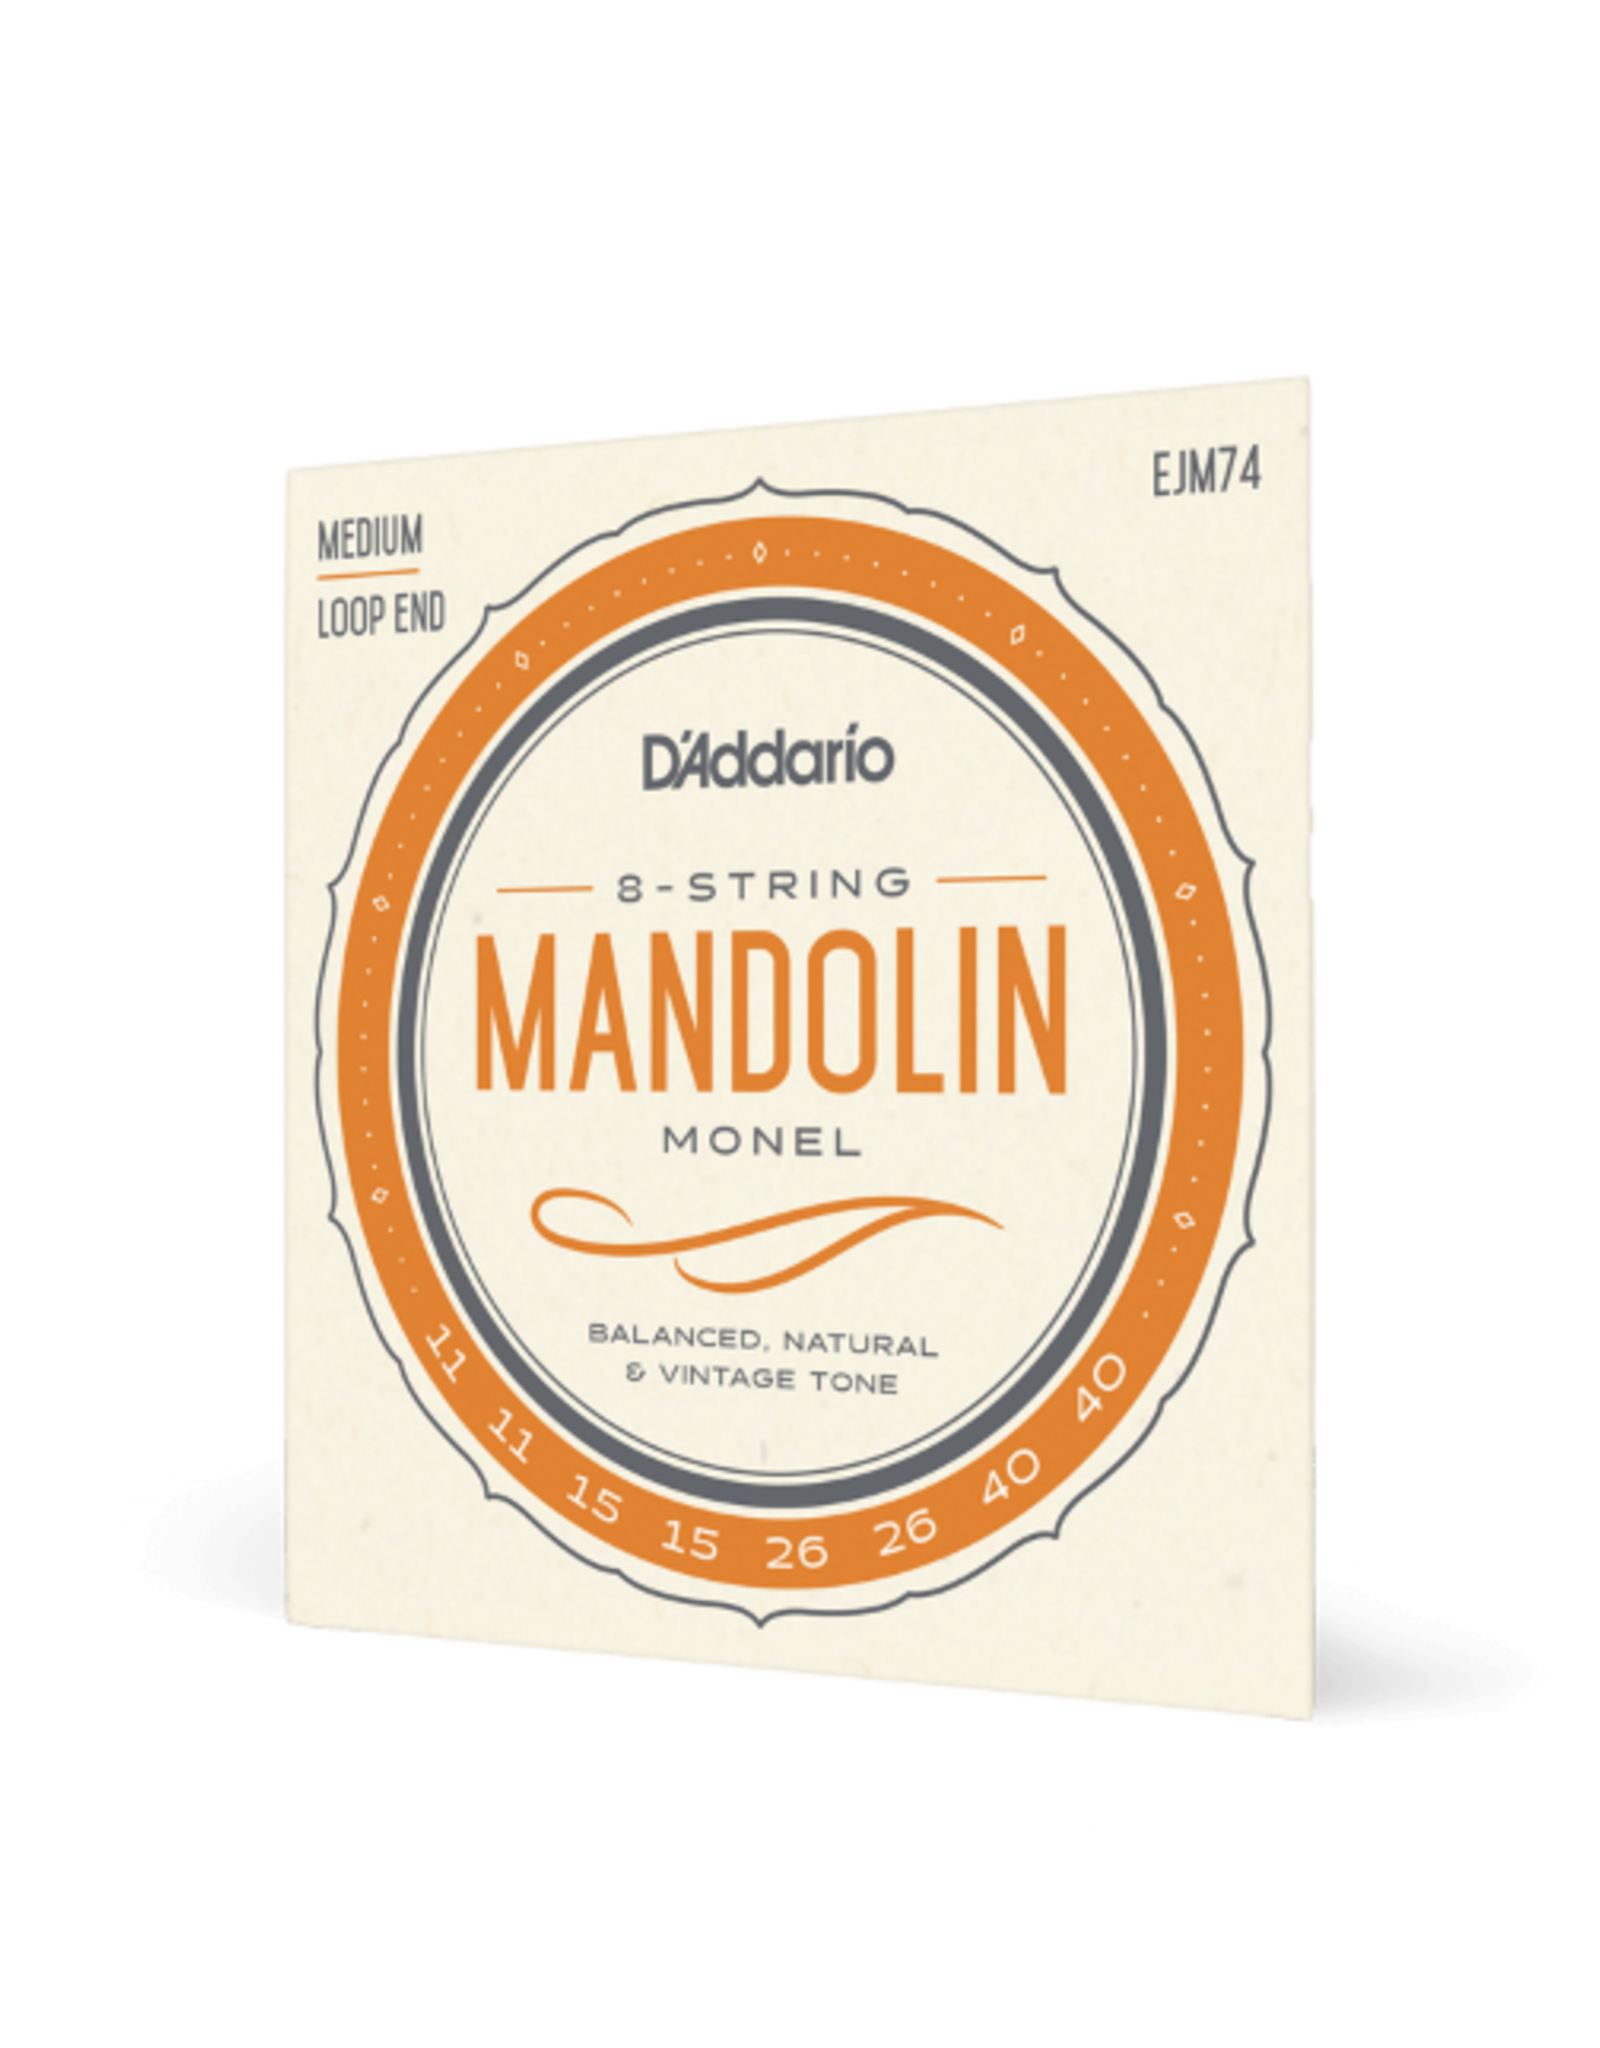 D'Addario D'Addario EJM74 Monel Mandolin Strings, Medium, 11-40